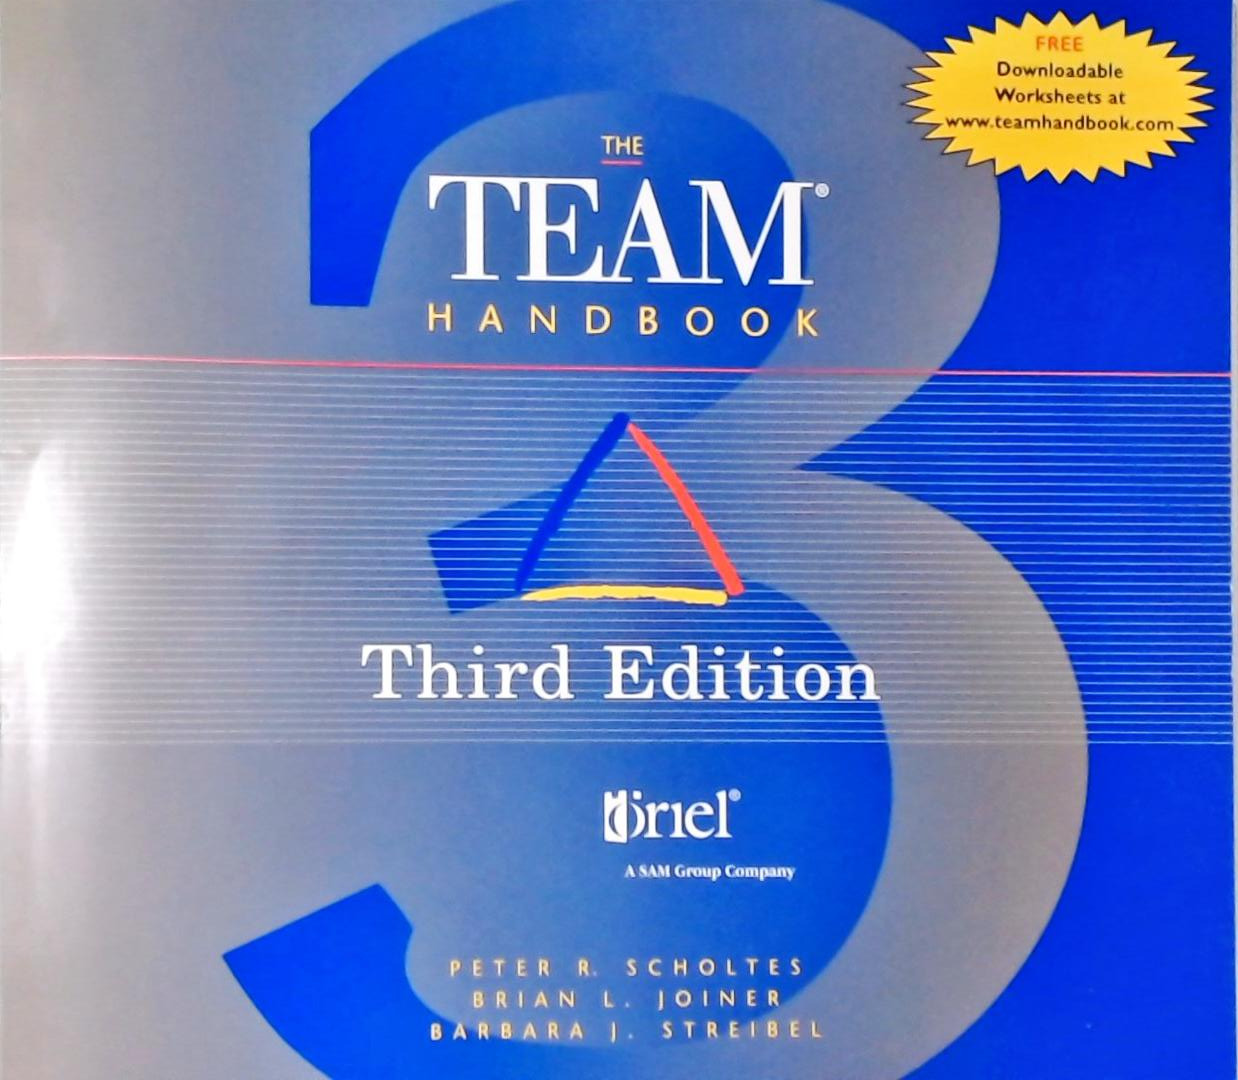 The Team Handbook